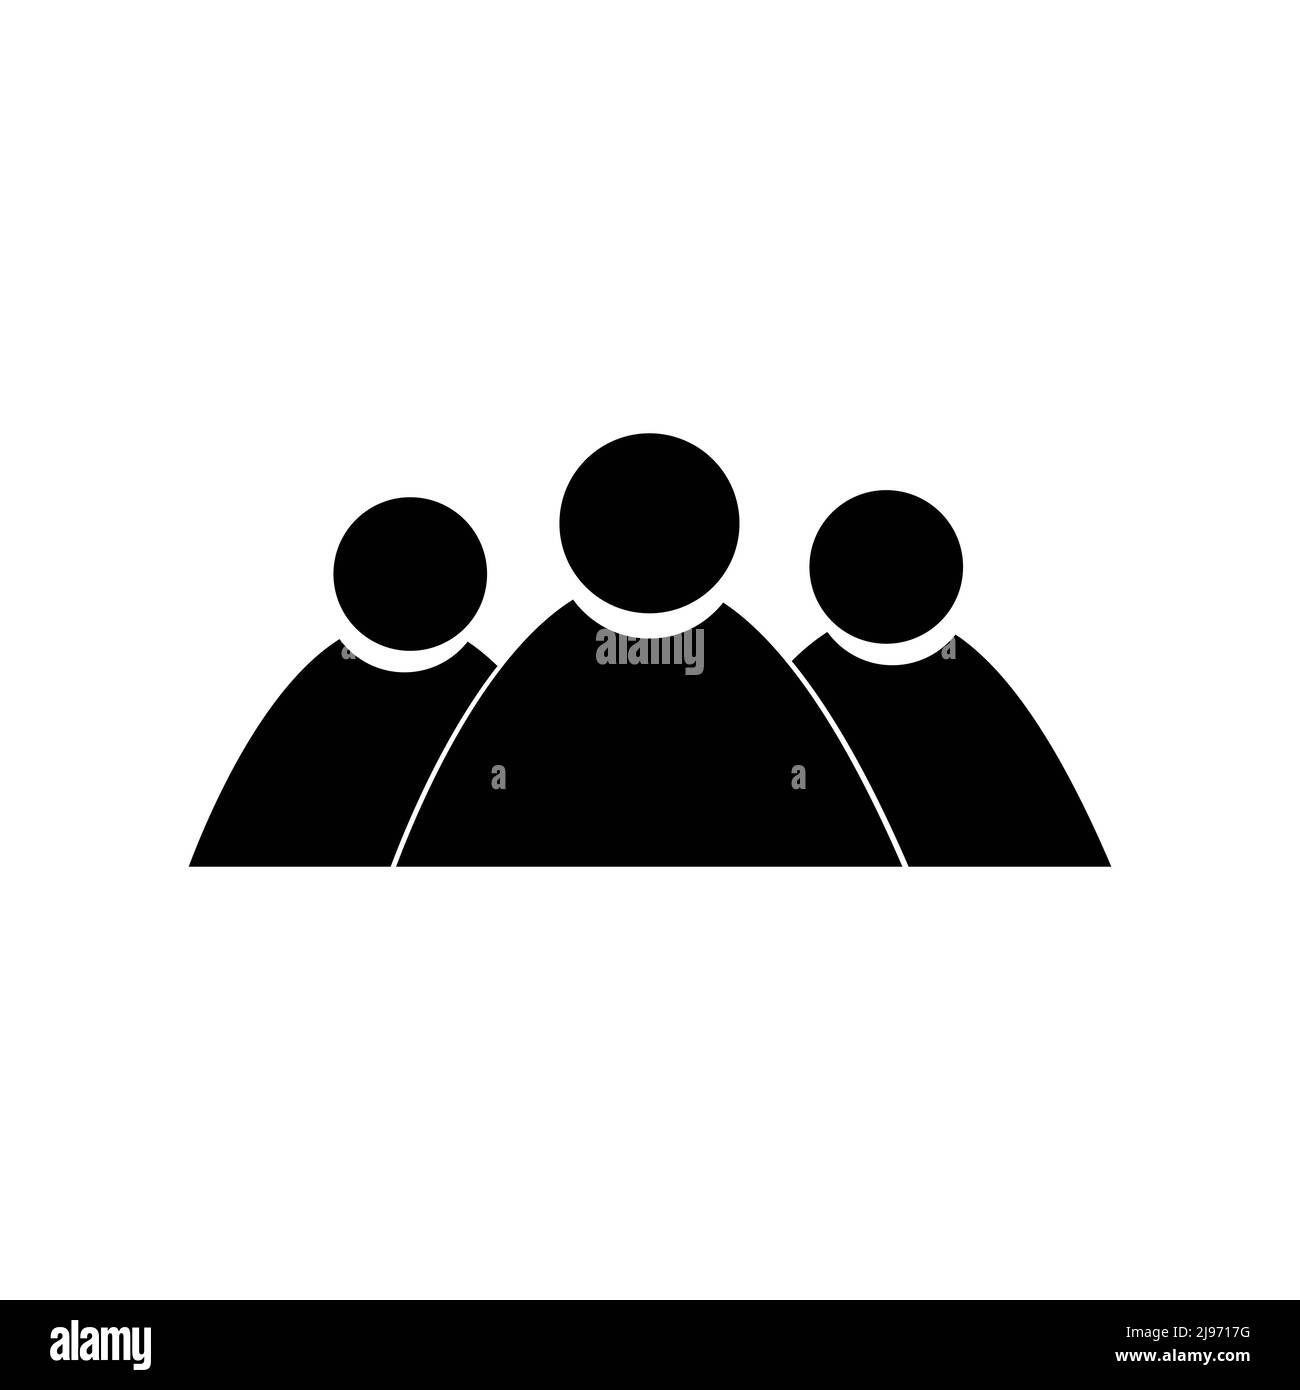 people logo stock illustration design Stock Photo